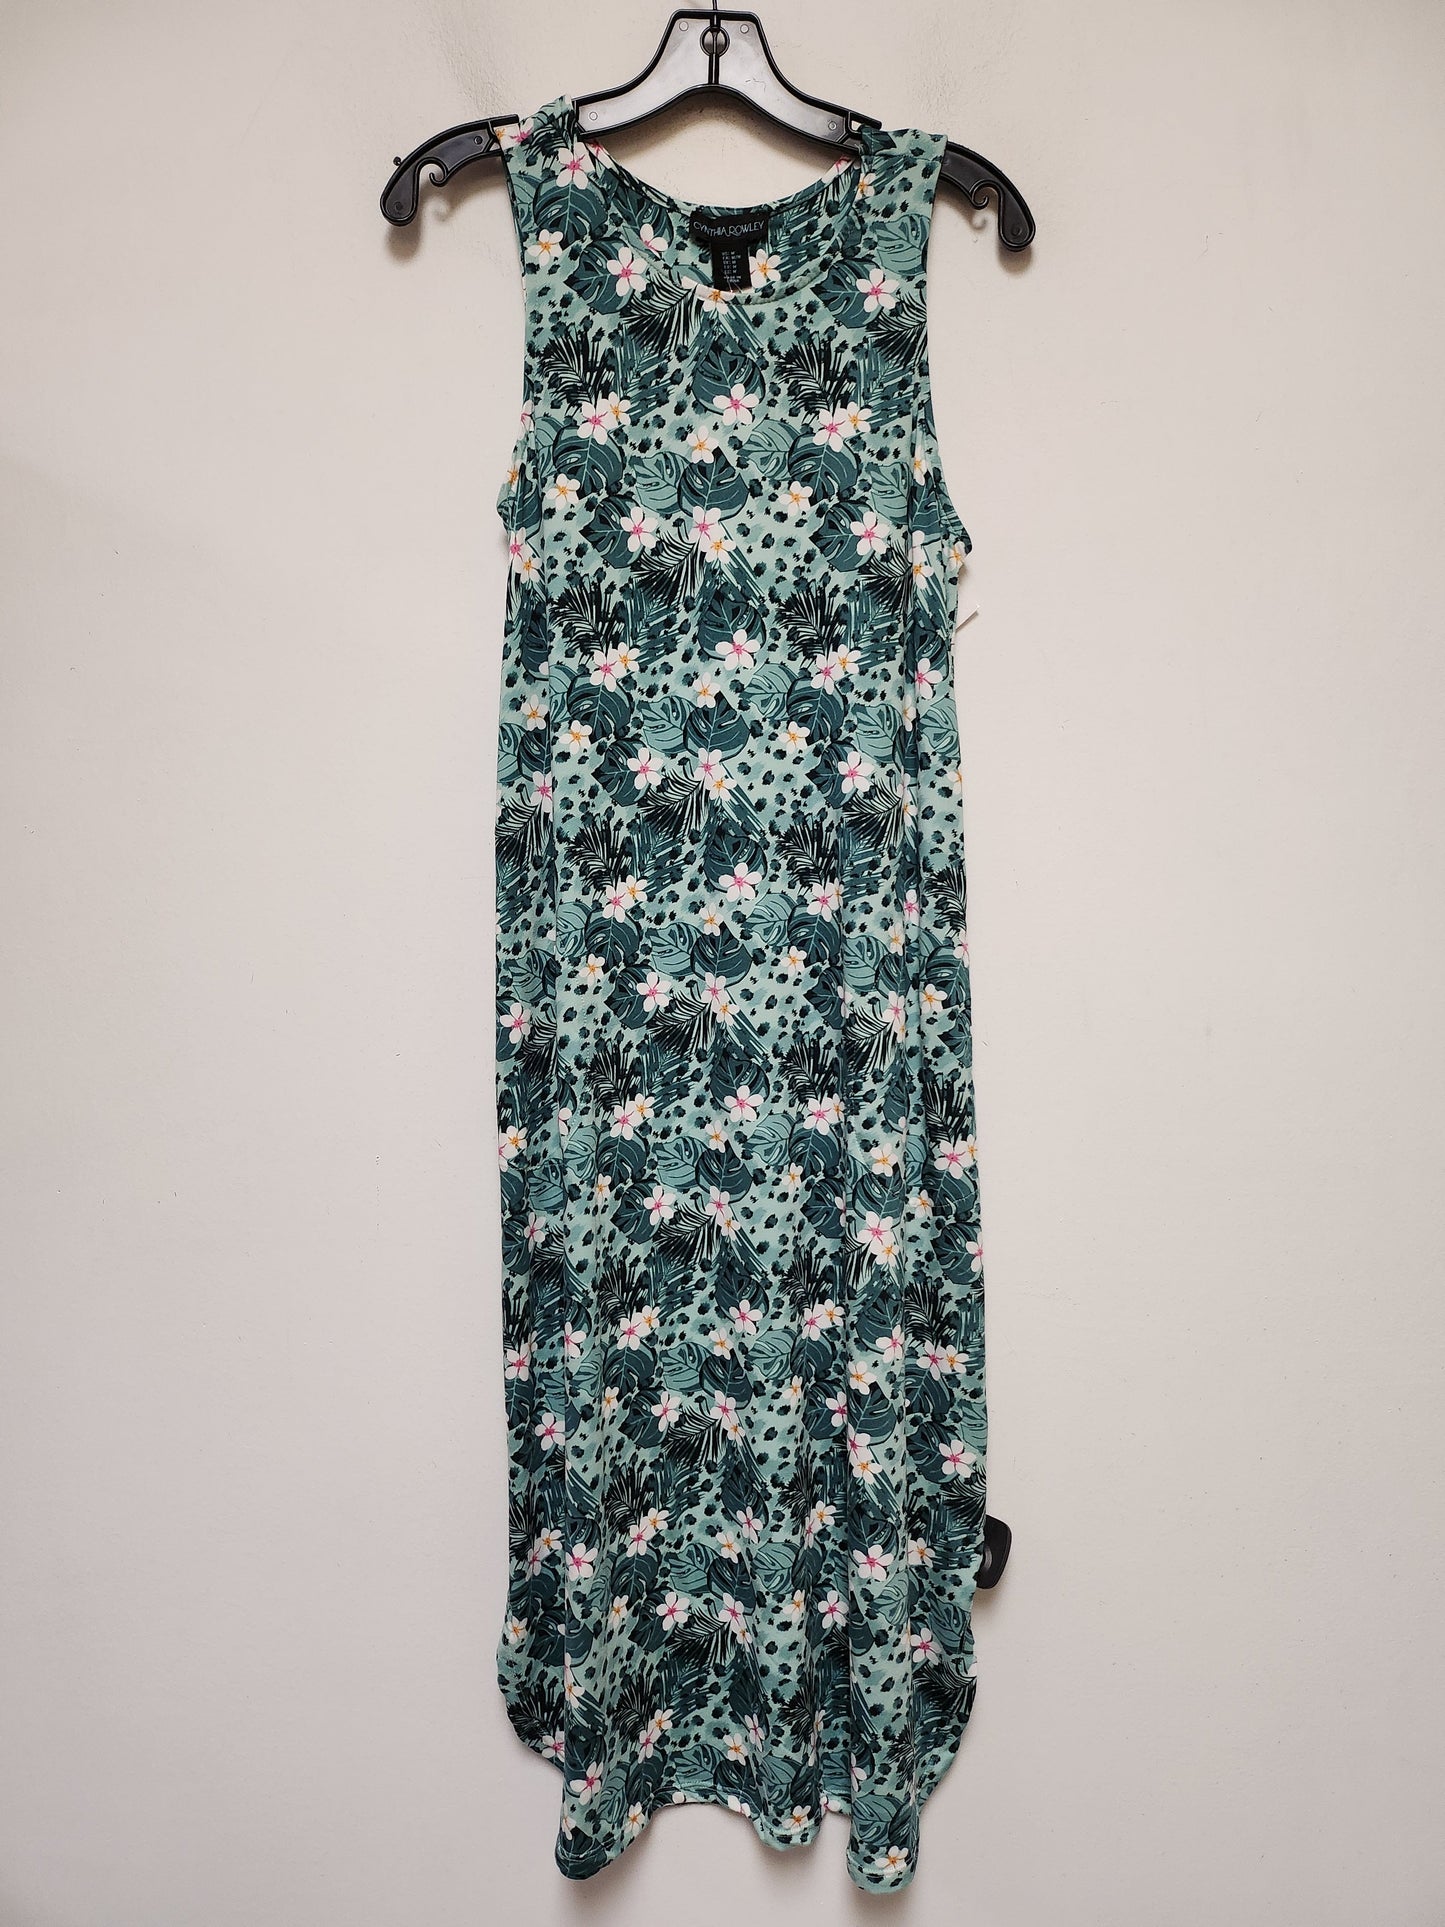 Tropical Print Dress Casual Maxi Cynthia Rowley, Size M